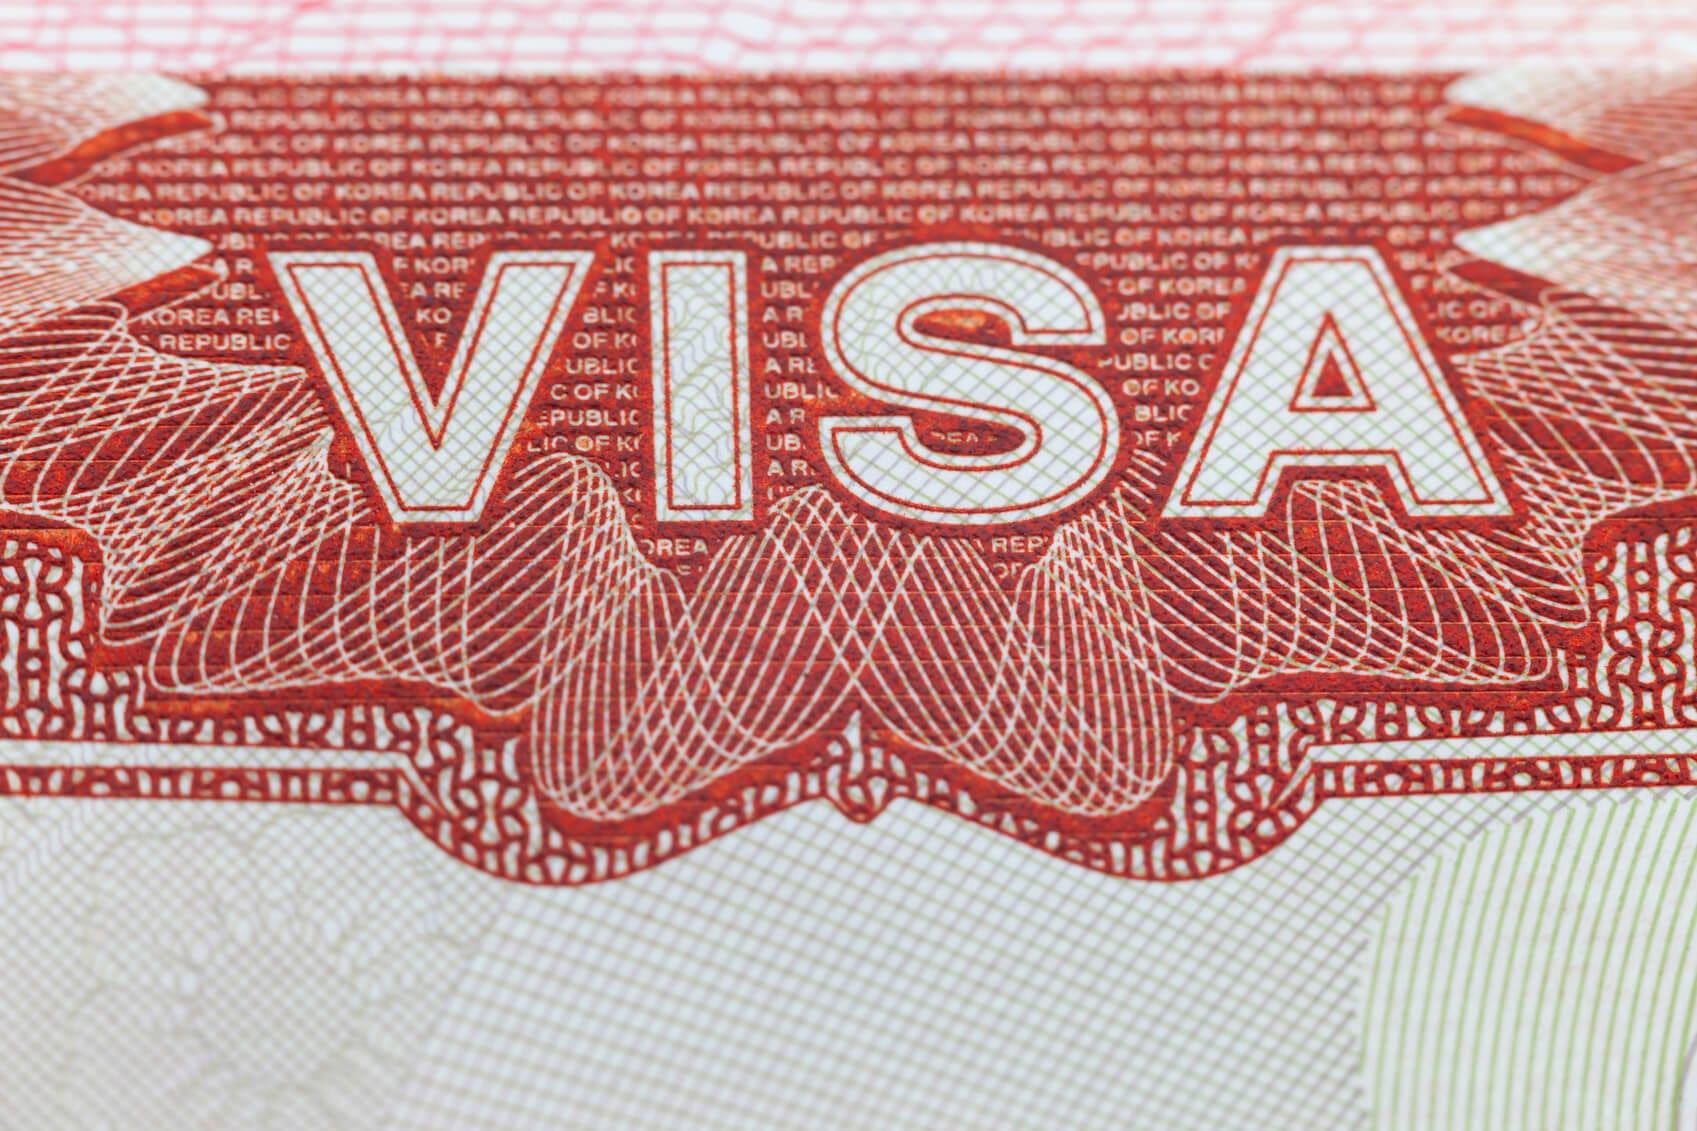 travel visa international